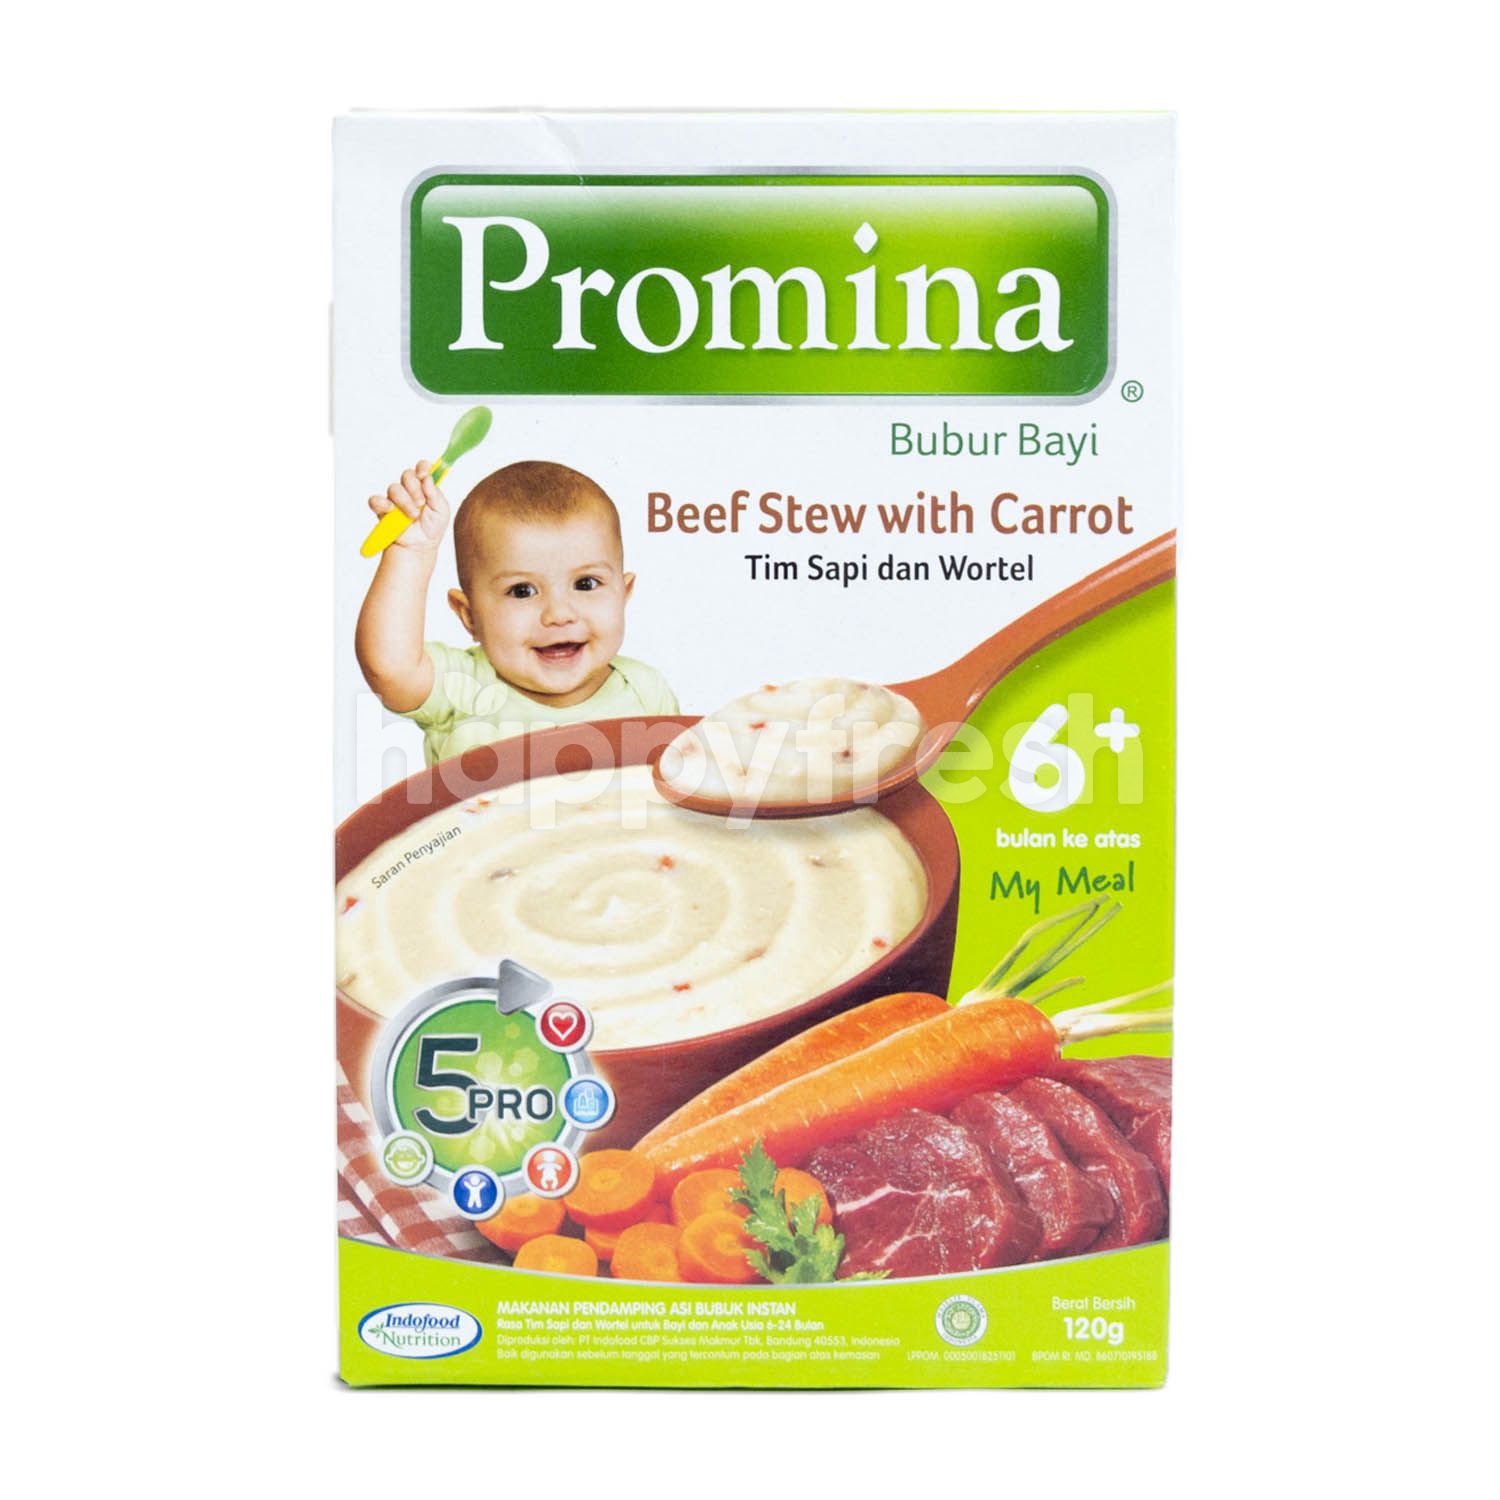 Jual Promina Baby Porridge Beef Stew Carrot Di Lotte Mart Happyfresh